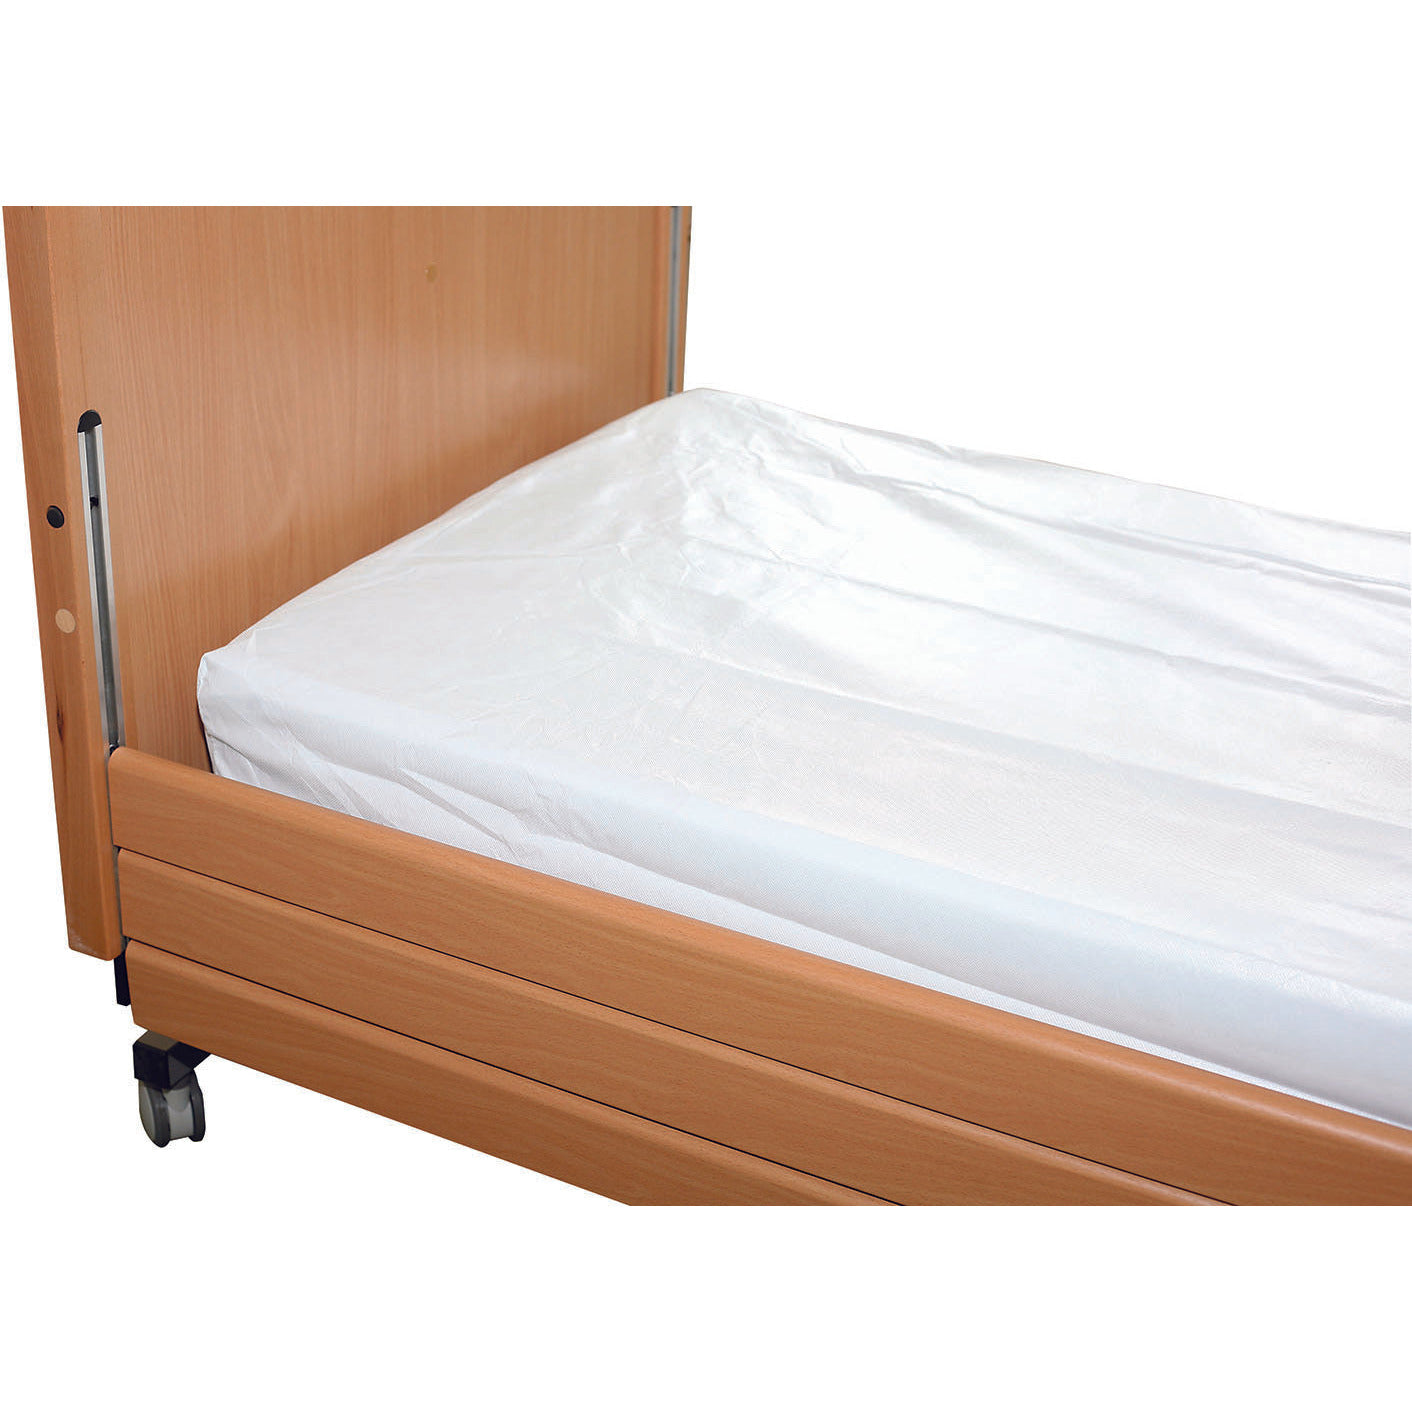 Community mattress protectors - Single